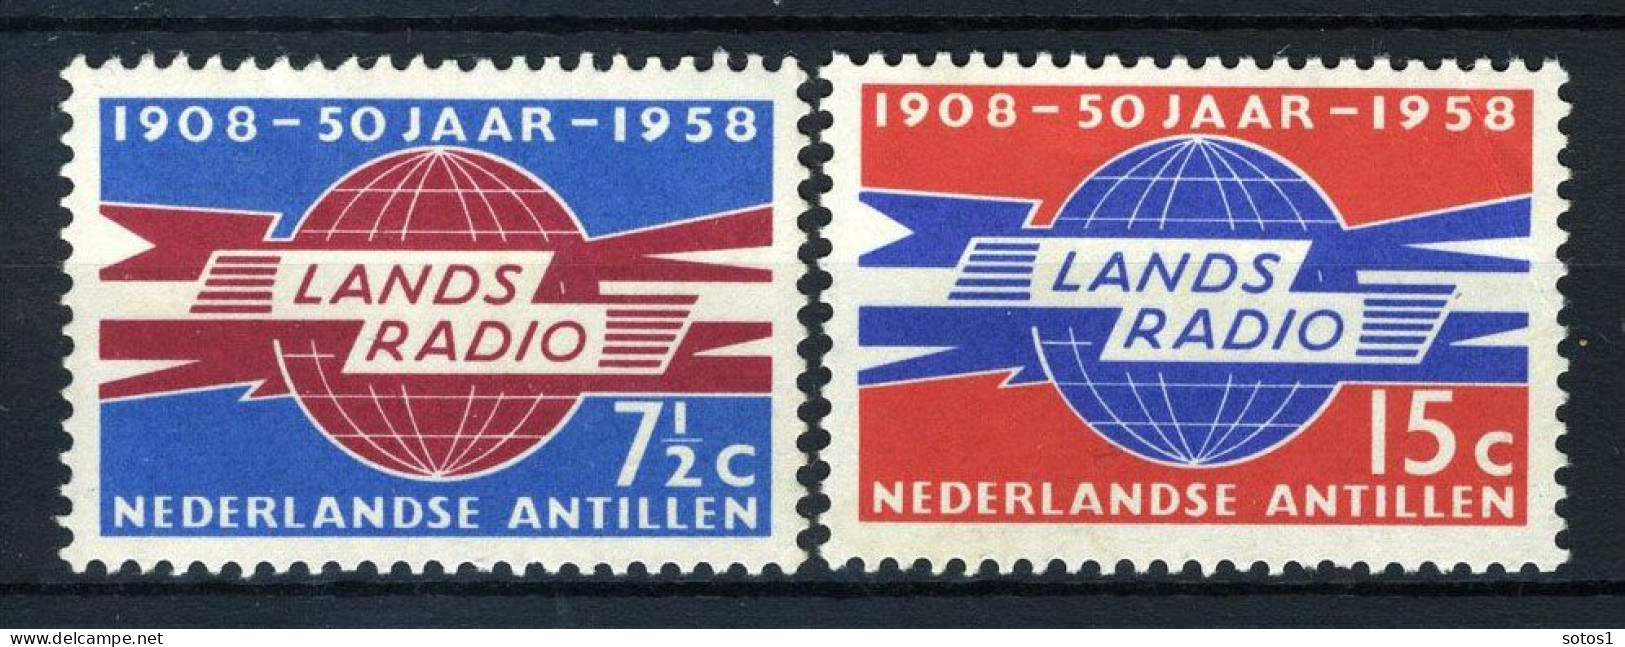 NL. ANTILLEN 291/292 MH 1959 - 50 Jaar Landsradio. - Curacao, Netherlands Antilles, Aruba